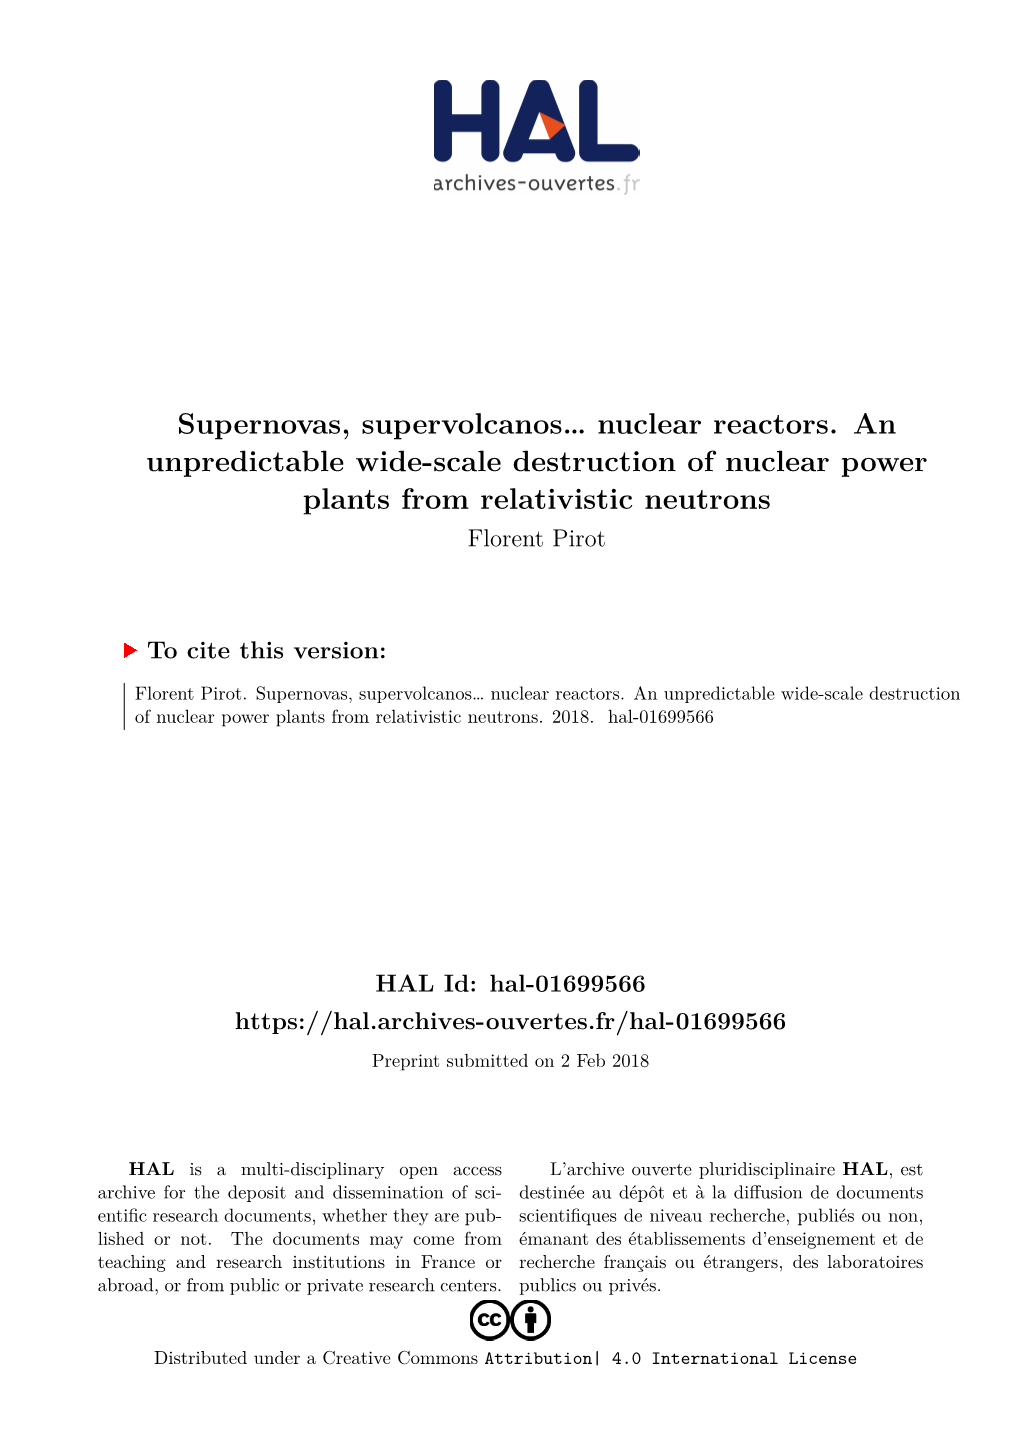 Supernovas, Supervolcanos… Nuclear Reactors